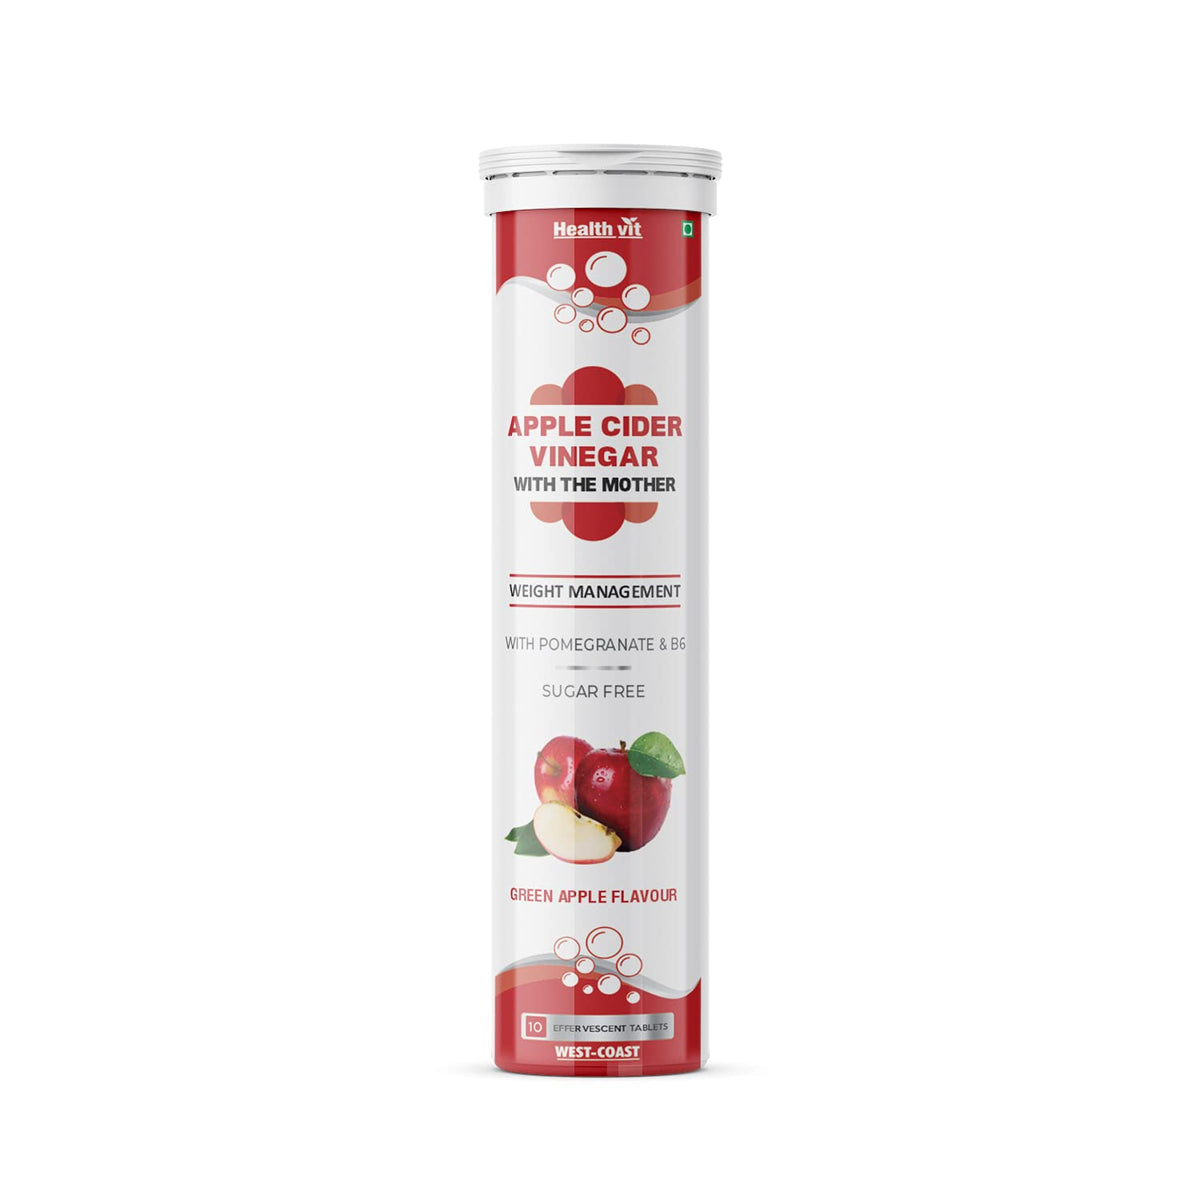 Healthvit Apple Cider Vinegar 500mg with Pomegranate & B6 for Weight Loss, Immunity, Metabolism, Heart health - Sugar Free 10 Effervescent Tablets Green Apple